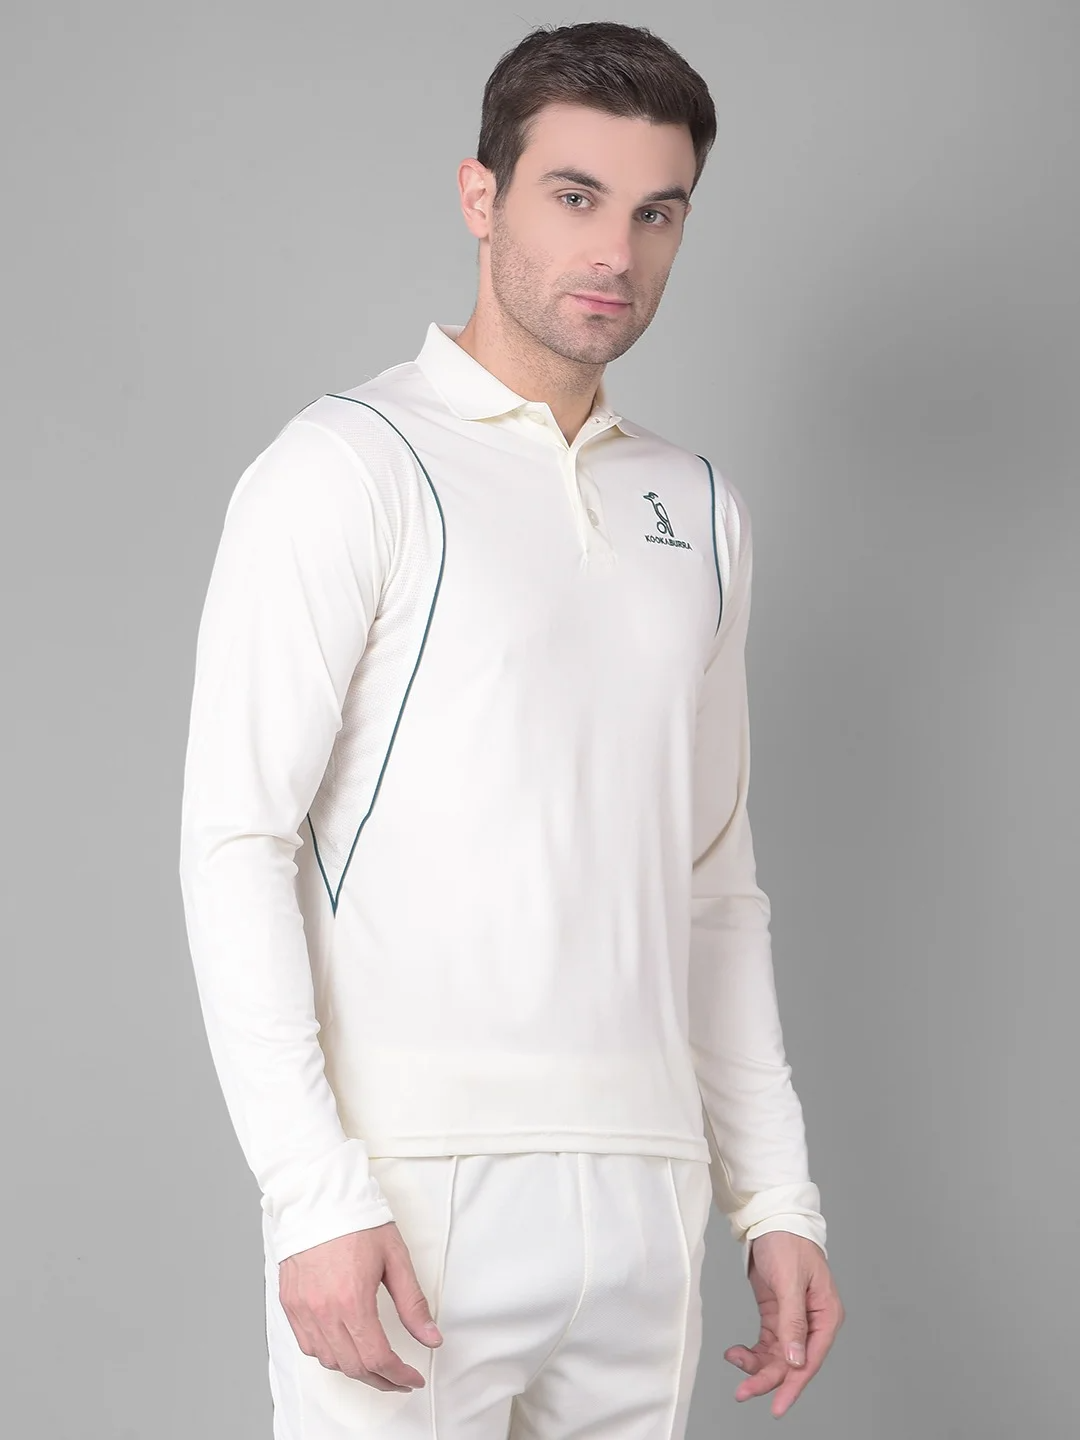 KOOKABURRA Cotton Poly Jersey Cricket Shirts WT02 F/s